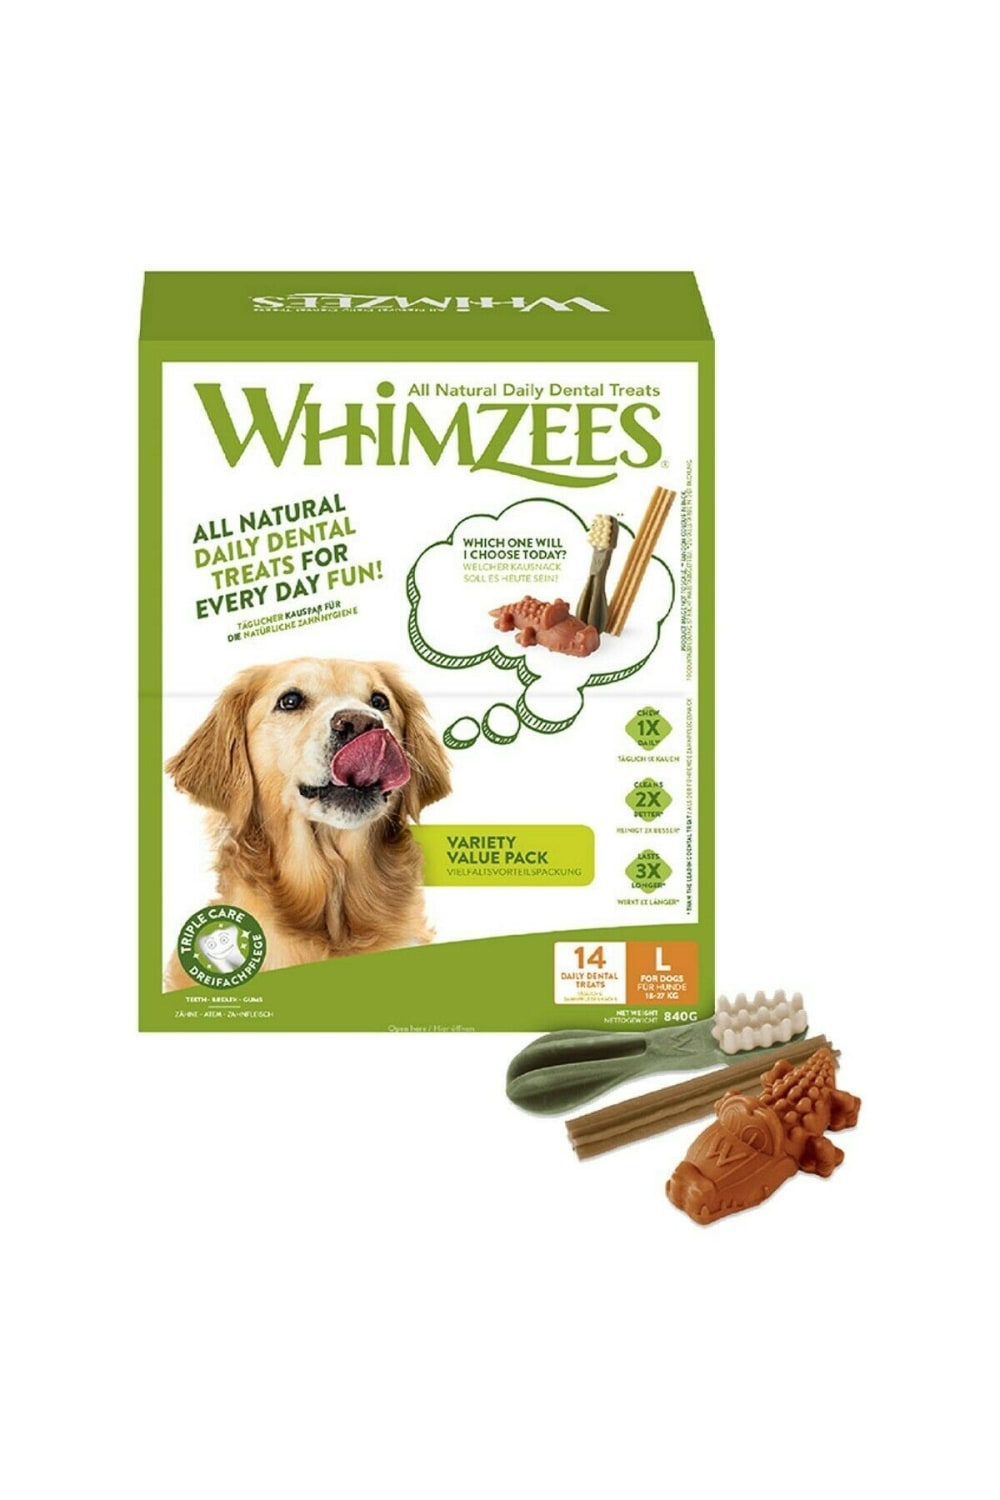 Whimzees Variety Box Dog Dental Treats (Pack of 14) (Green/Brown) (29.63oz)